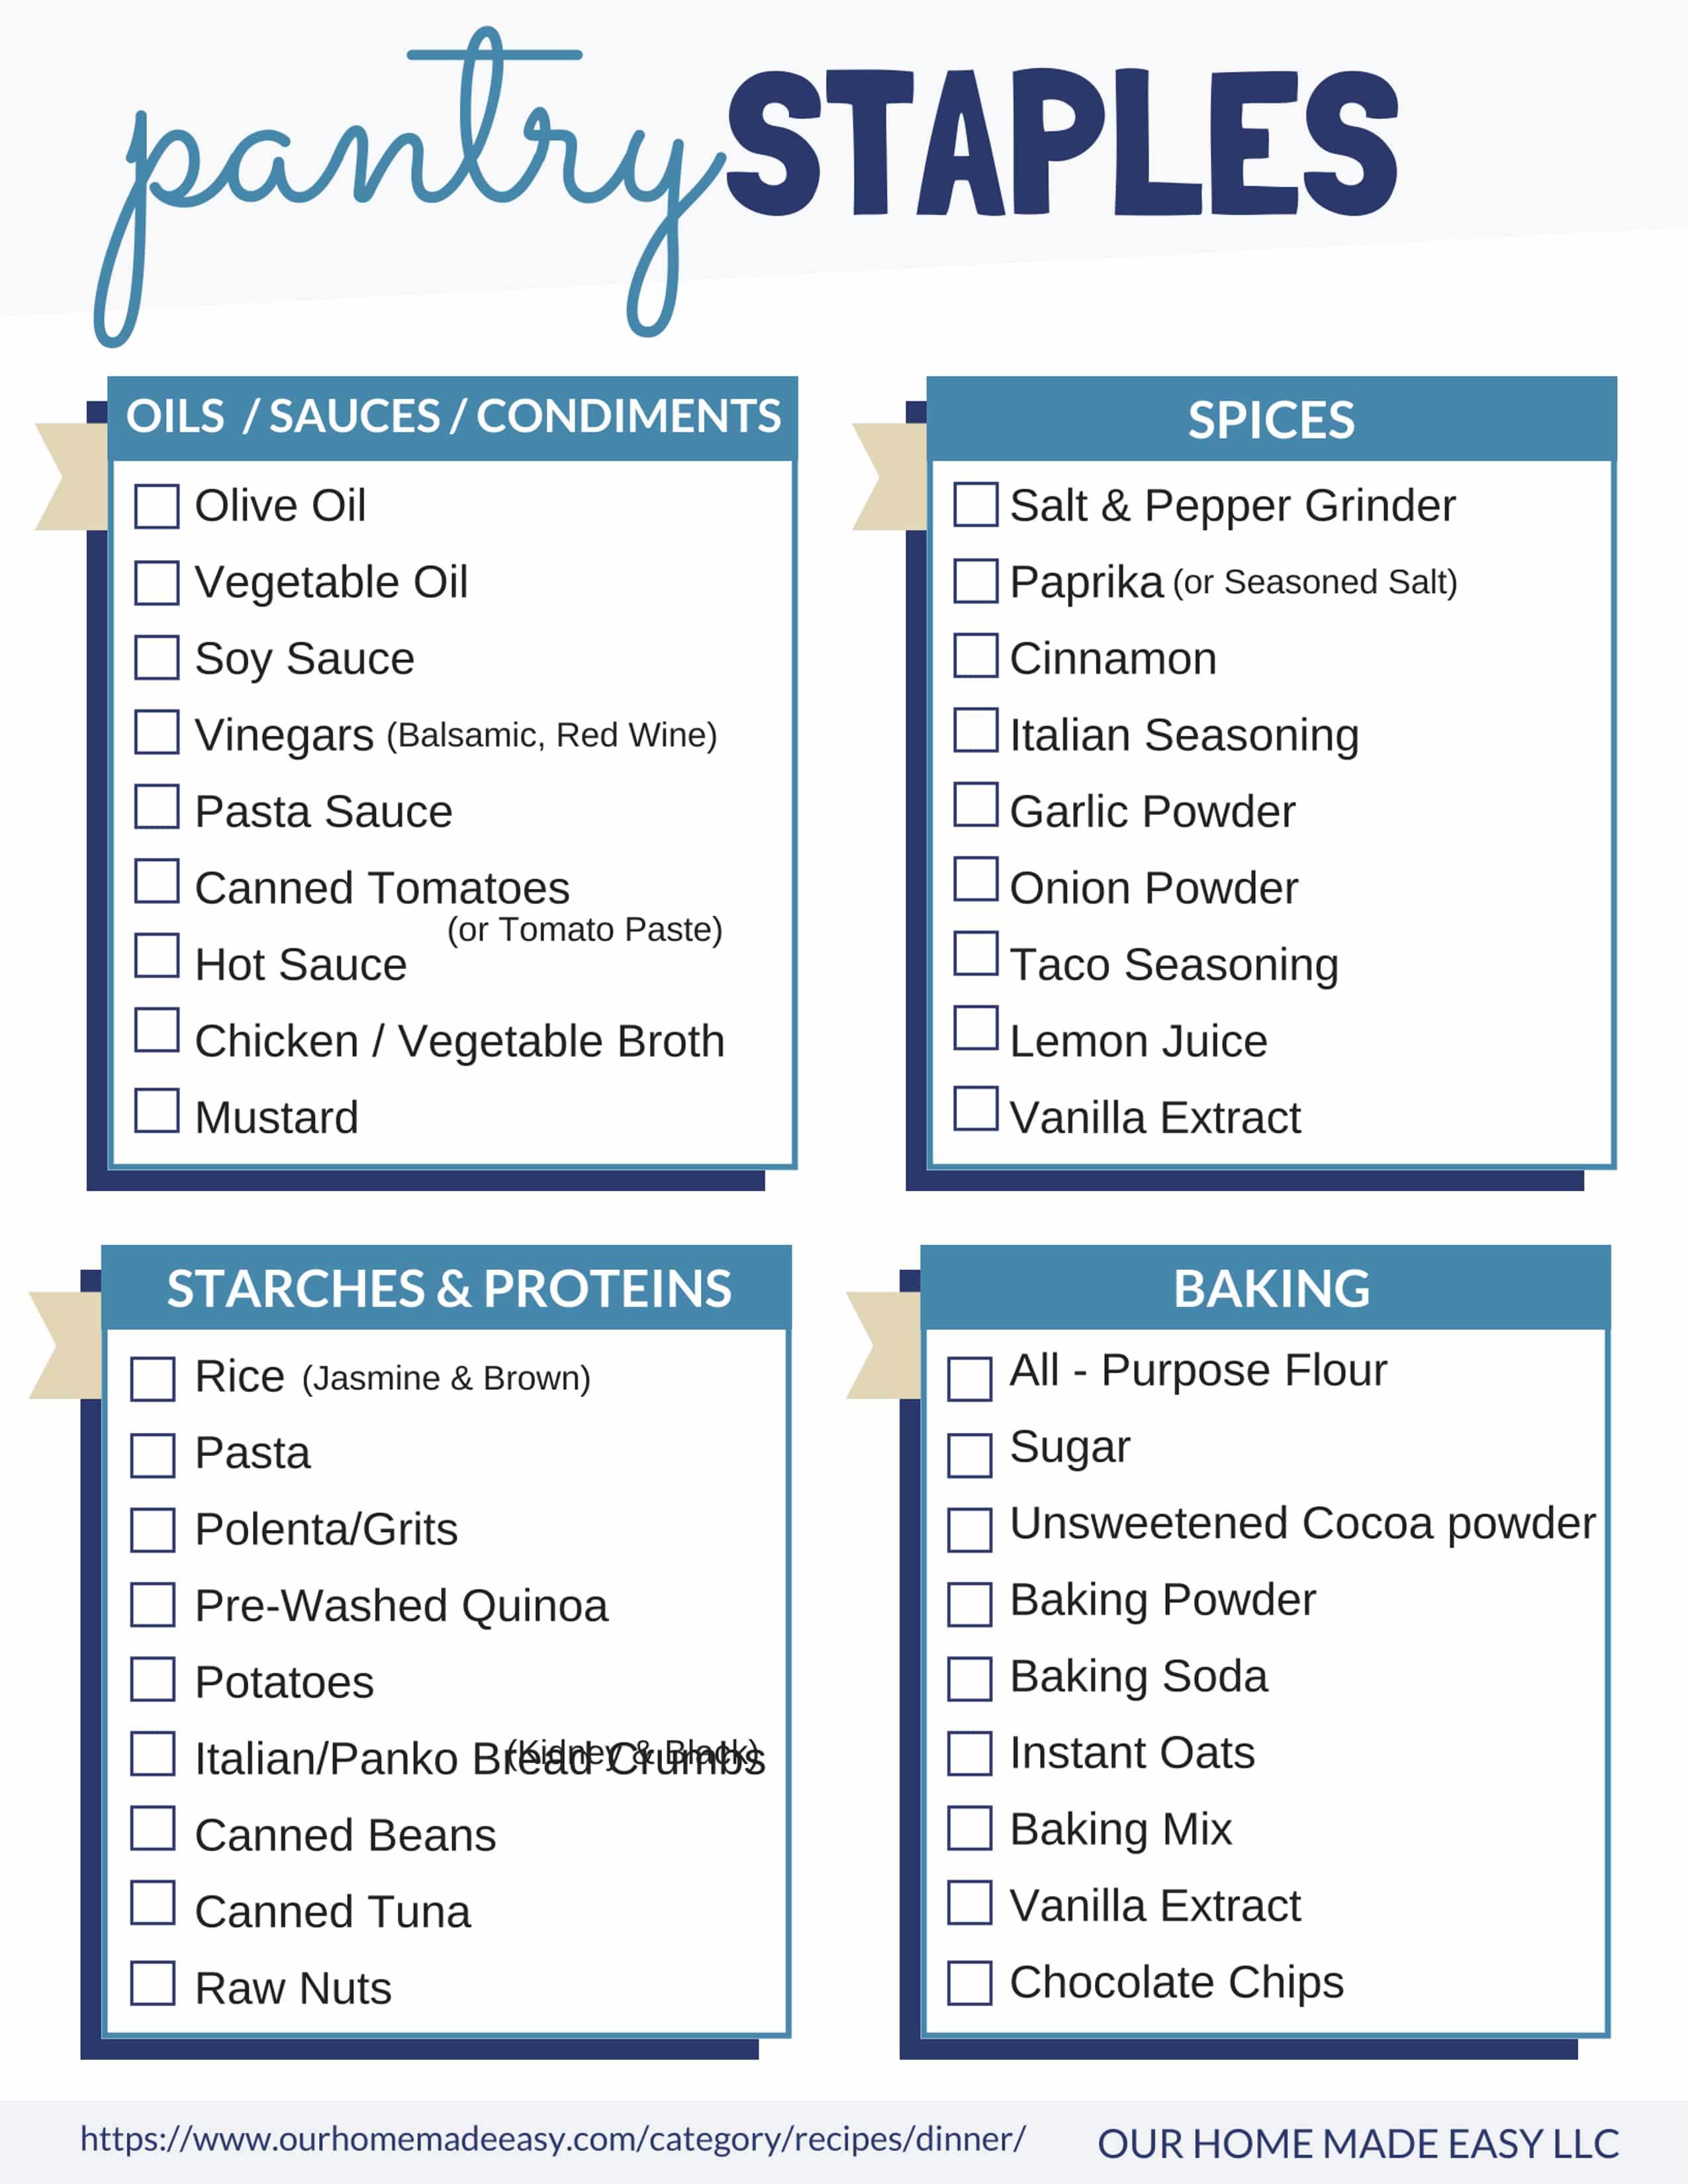 Free pantry staples checklist